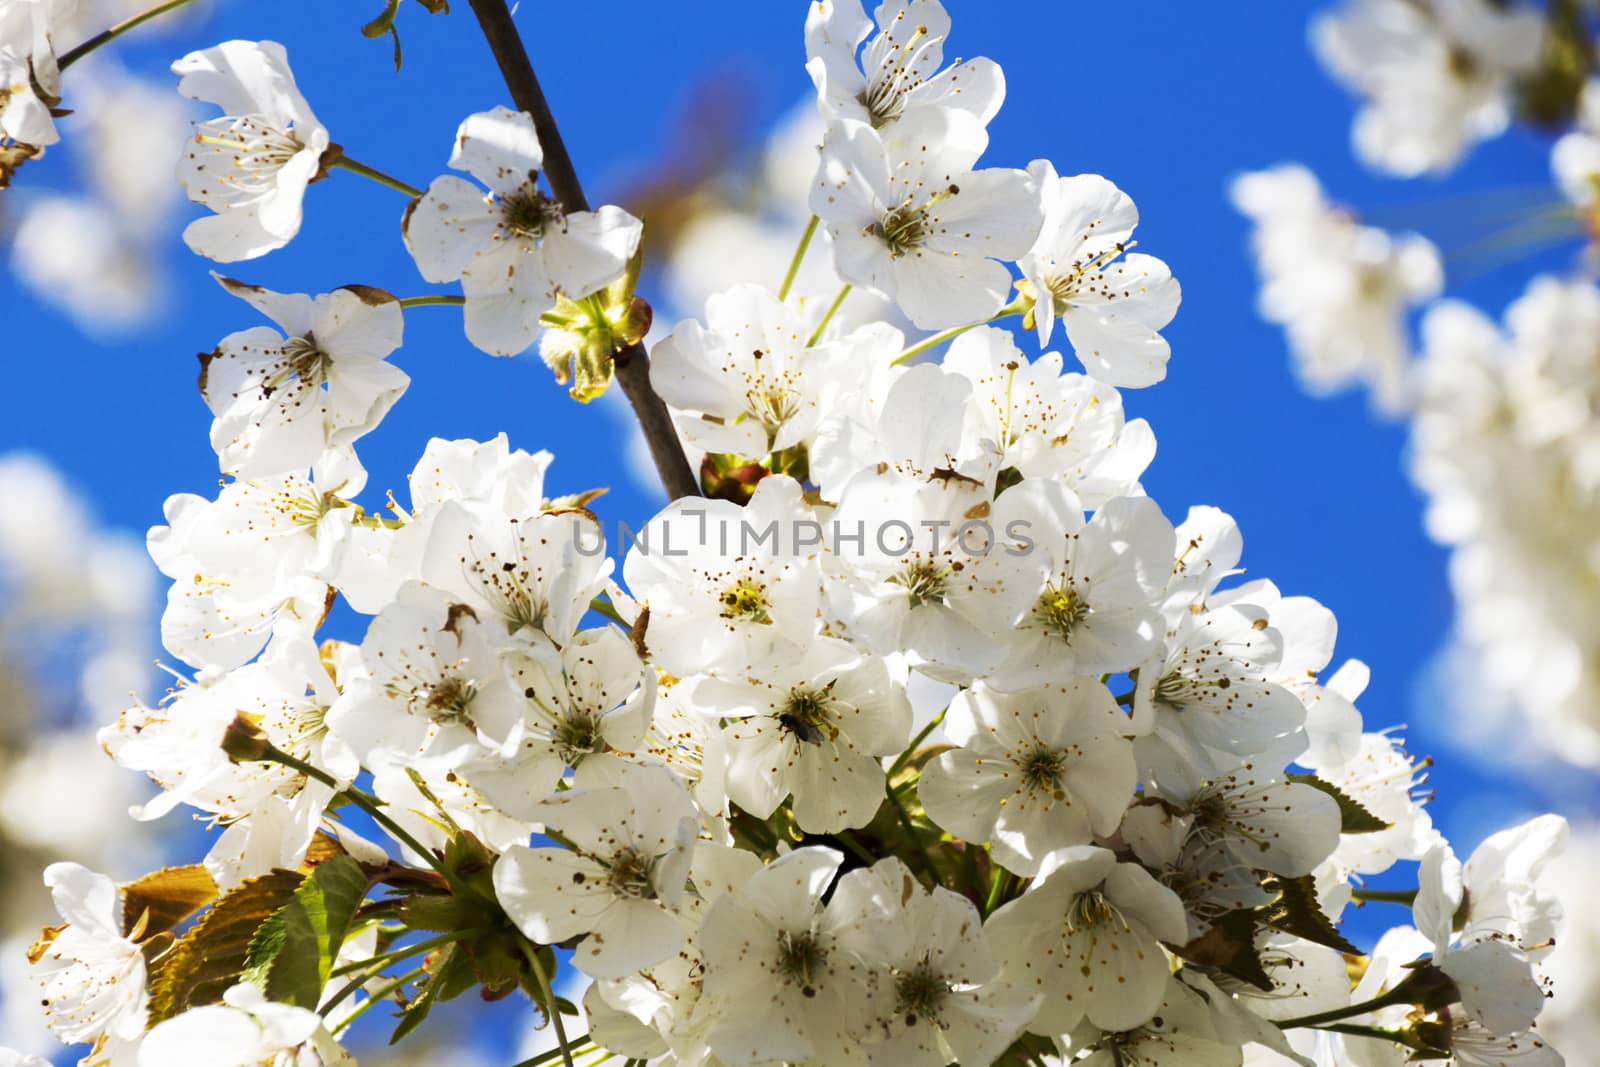 Cherry blossoms over blue sky background